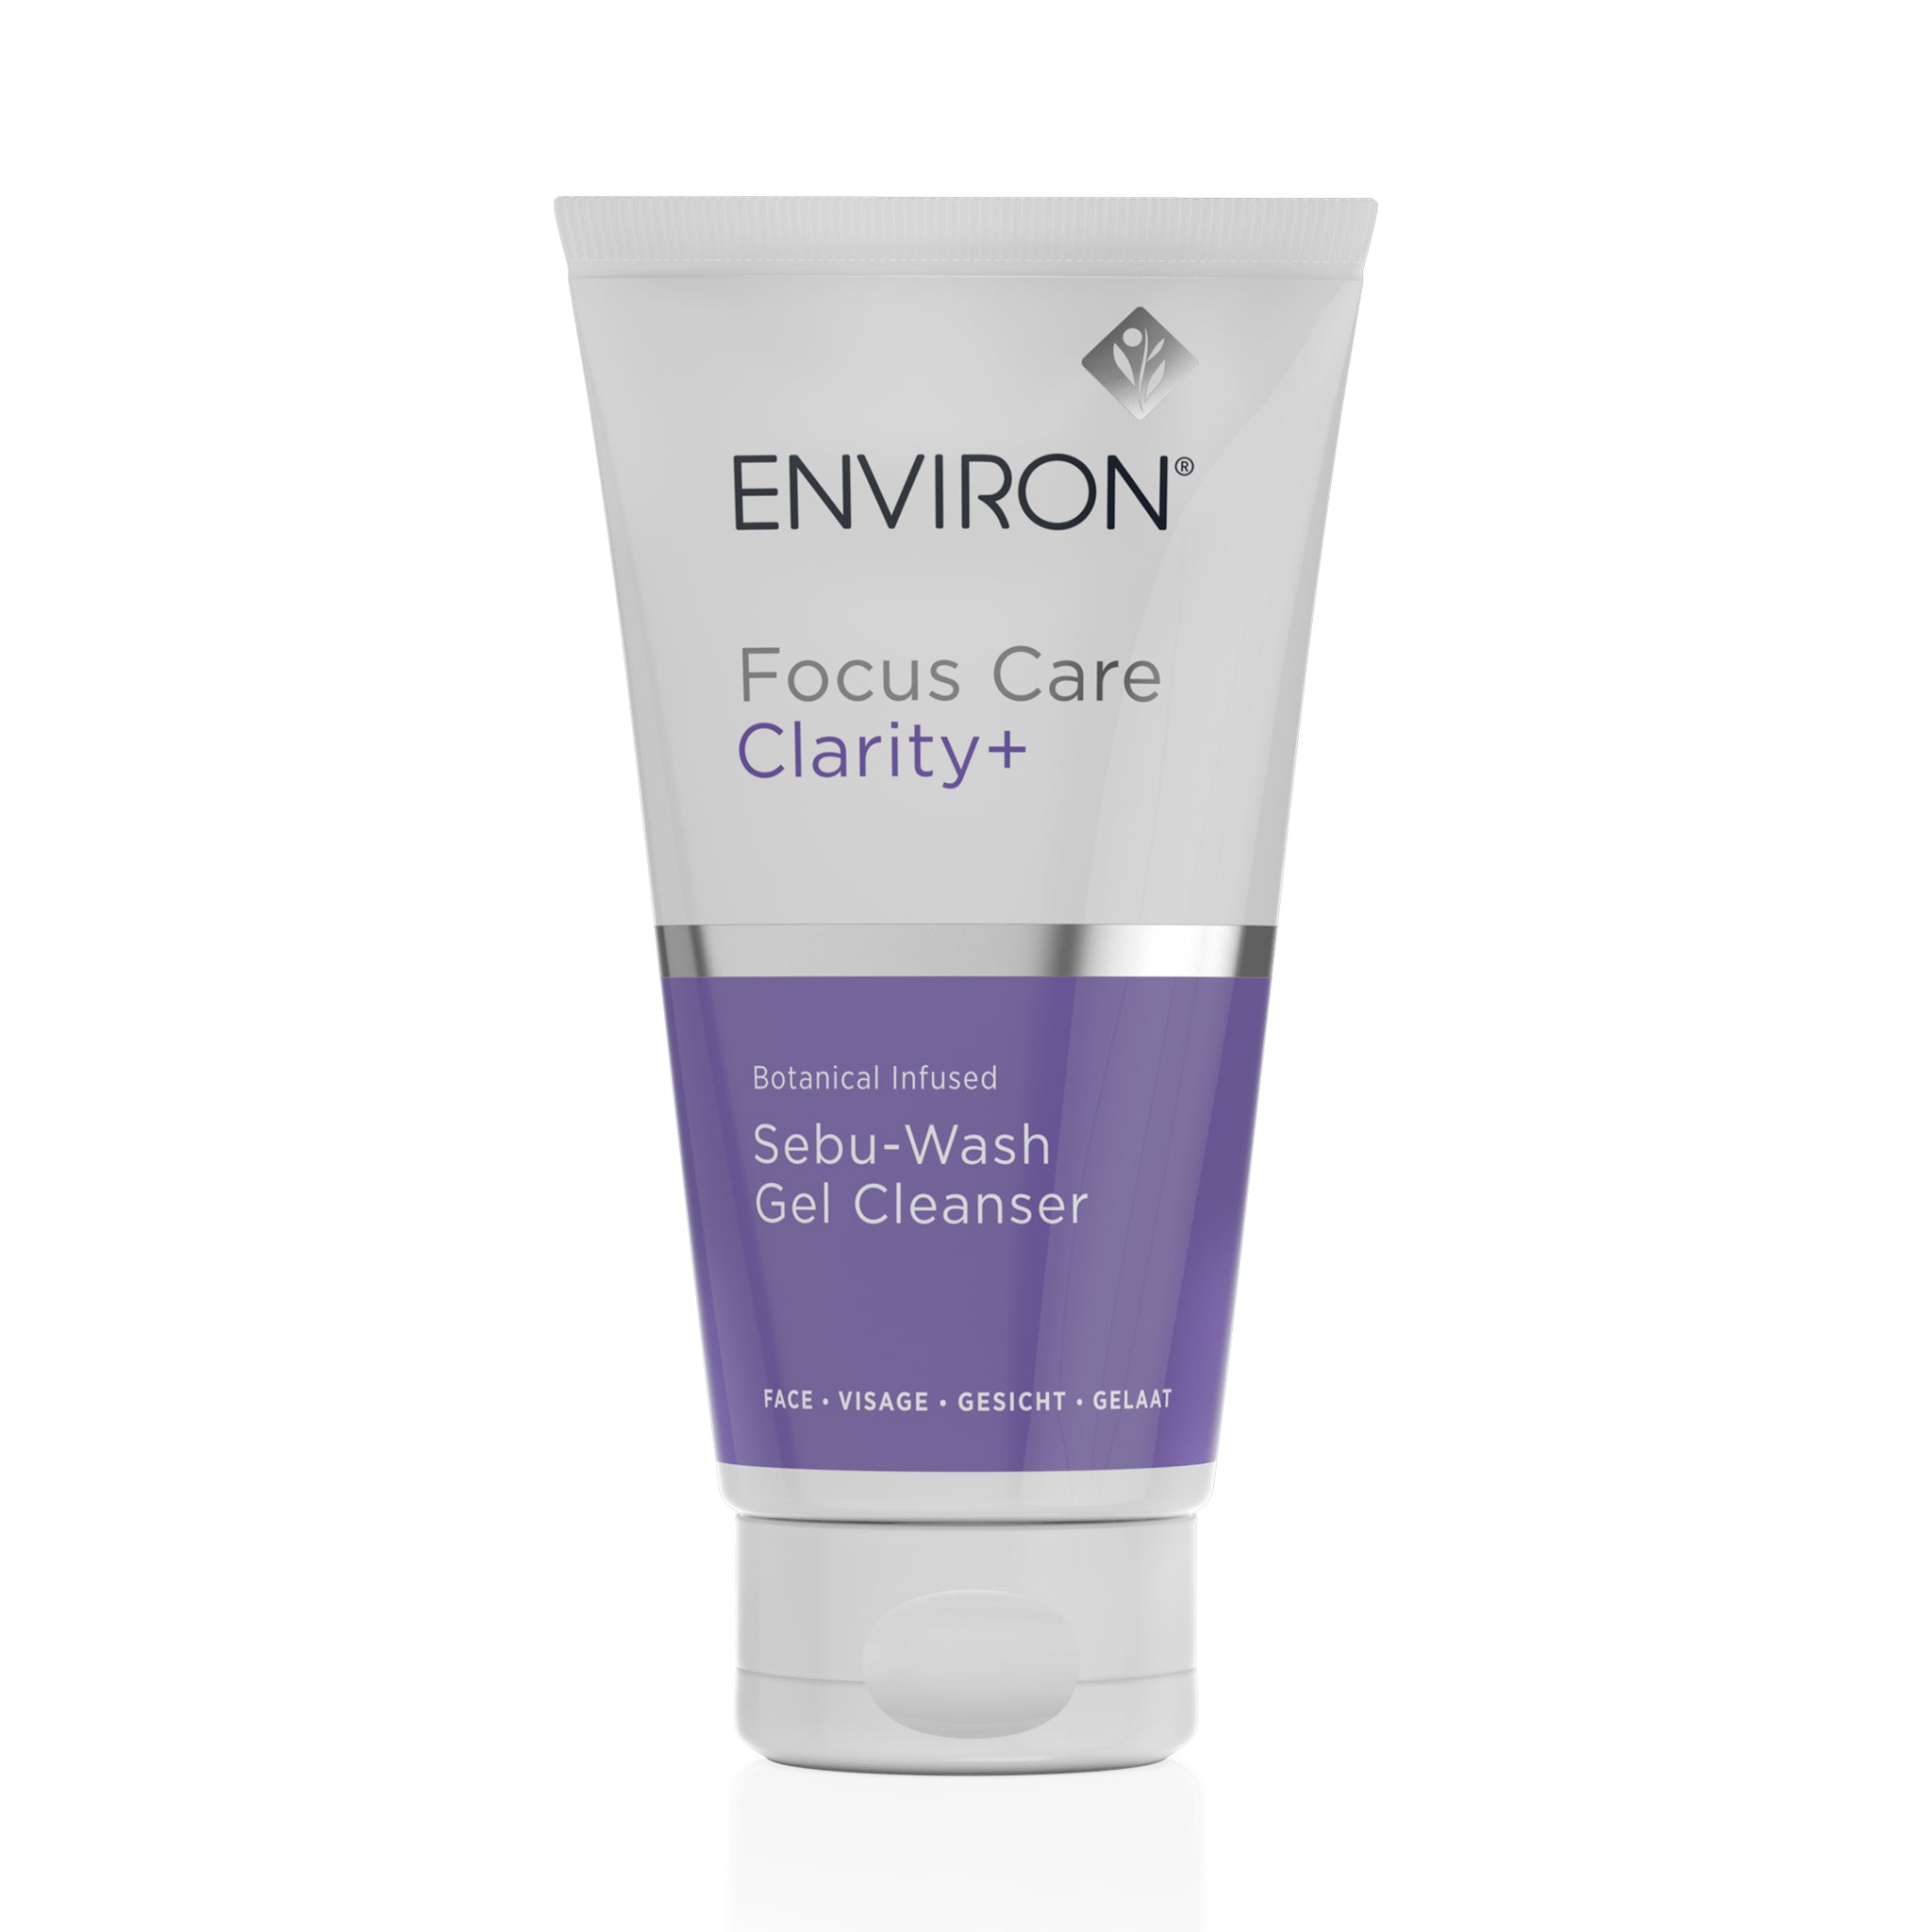 Environ Focus Care™ Clarity+ range Botanical Infused Sebu-Wash Gel Cleanser